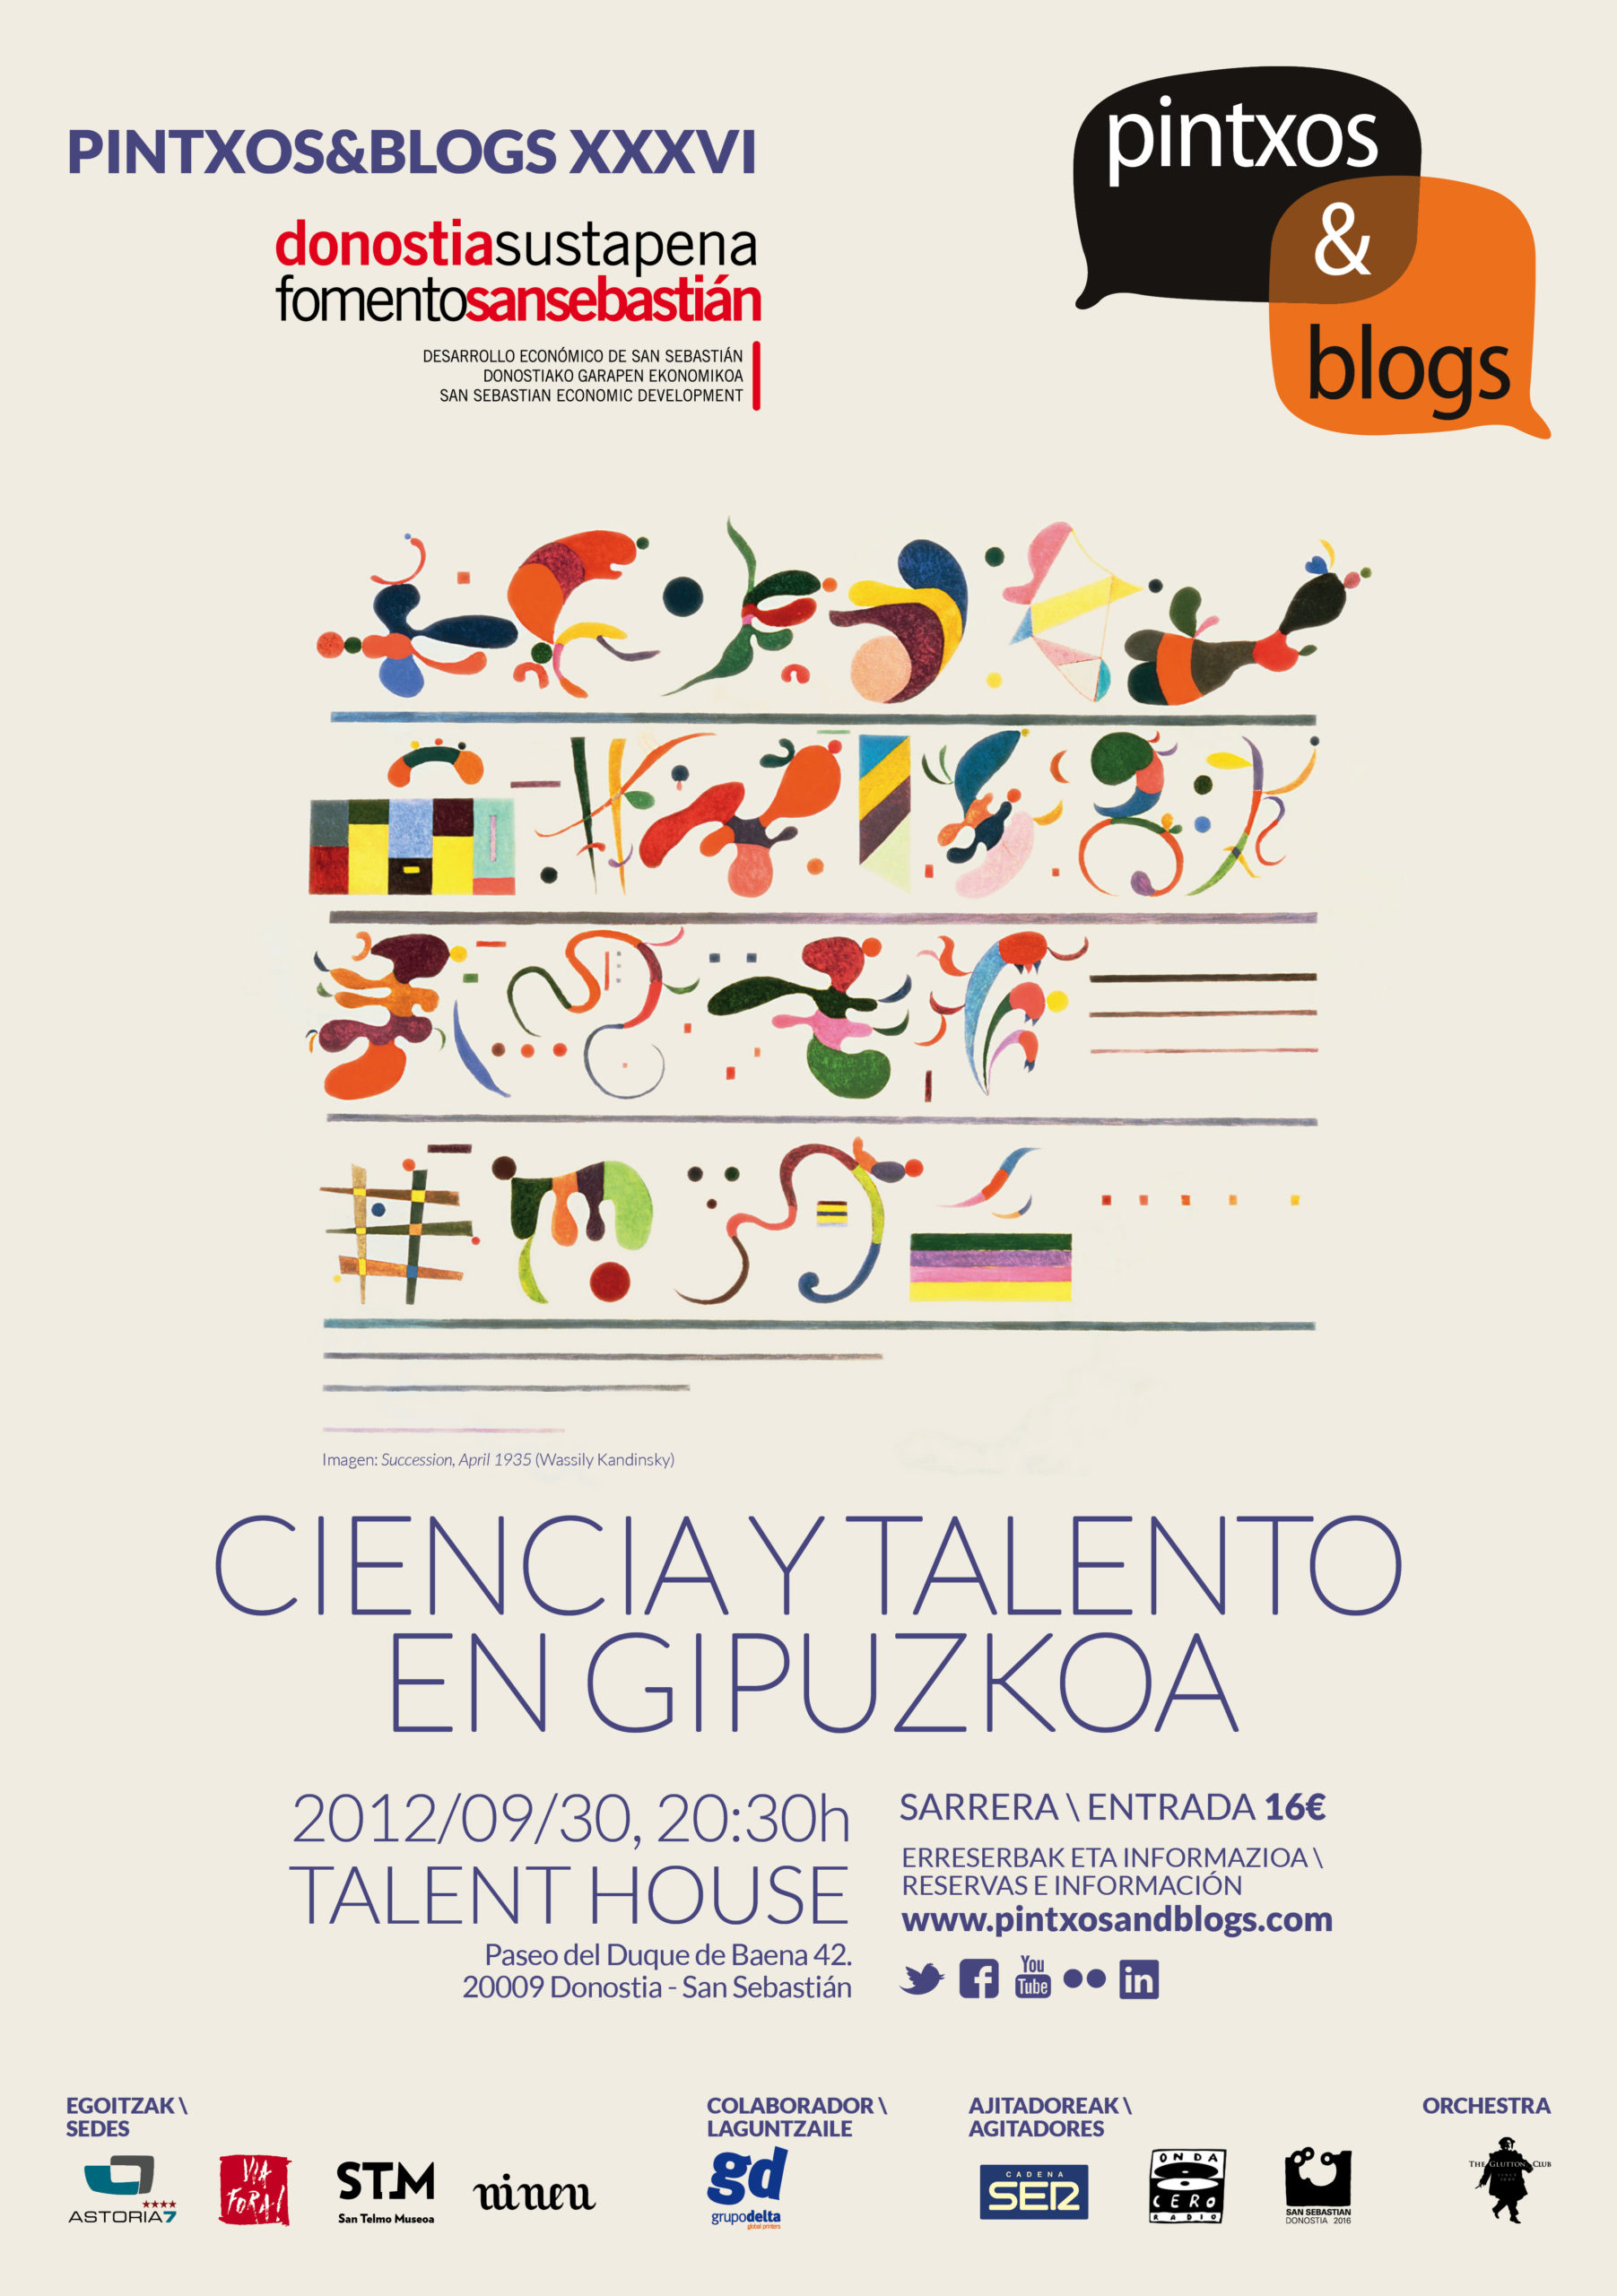 Pintxos&Blogs XXXVI. Ciencia y talento en Gipuzkoa. 2012.09.30, Talent House